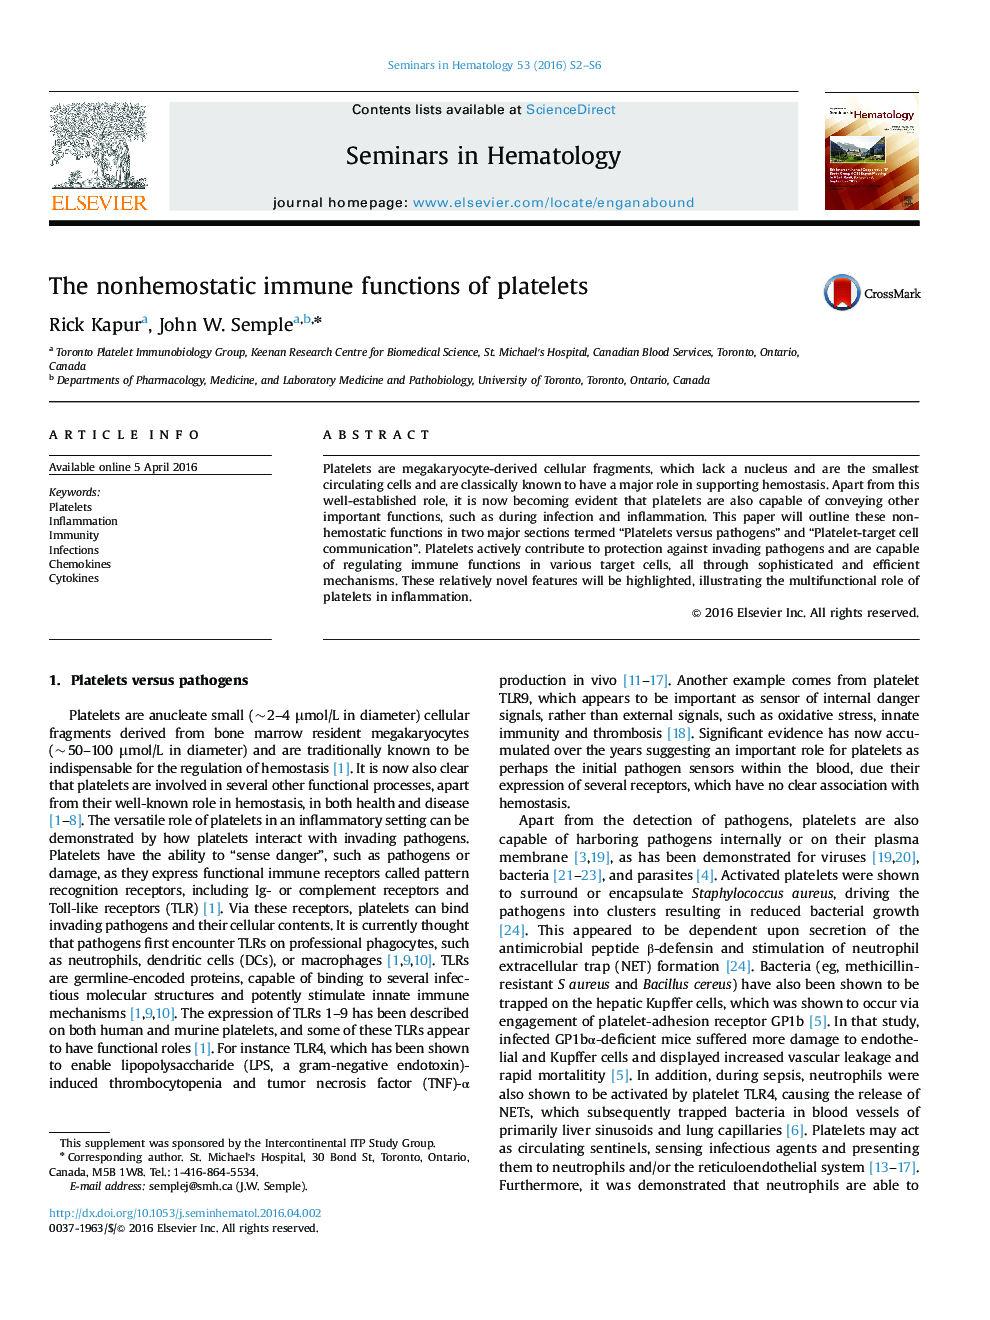 The nonhemostatic immune functions of platelets 